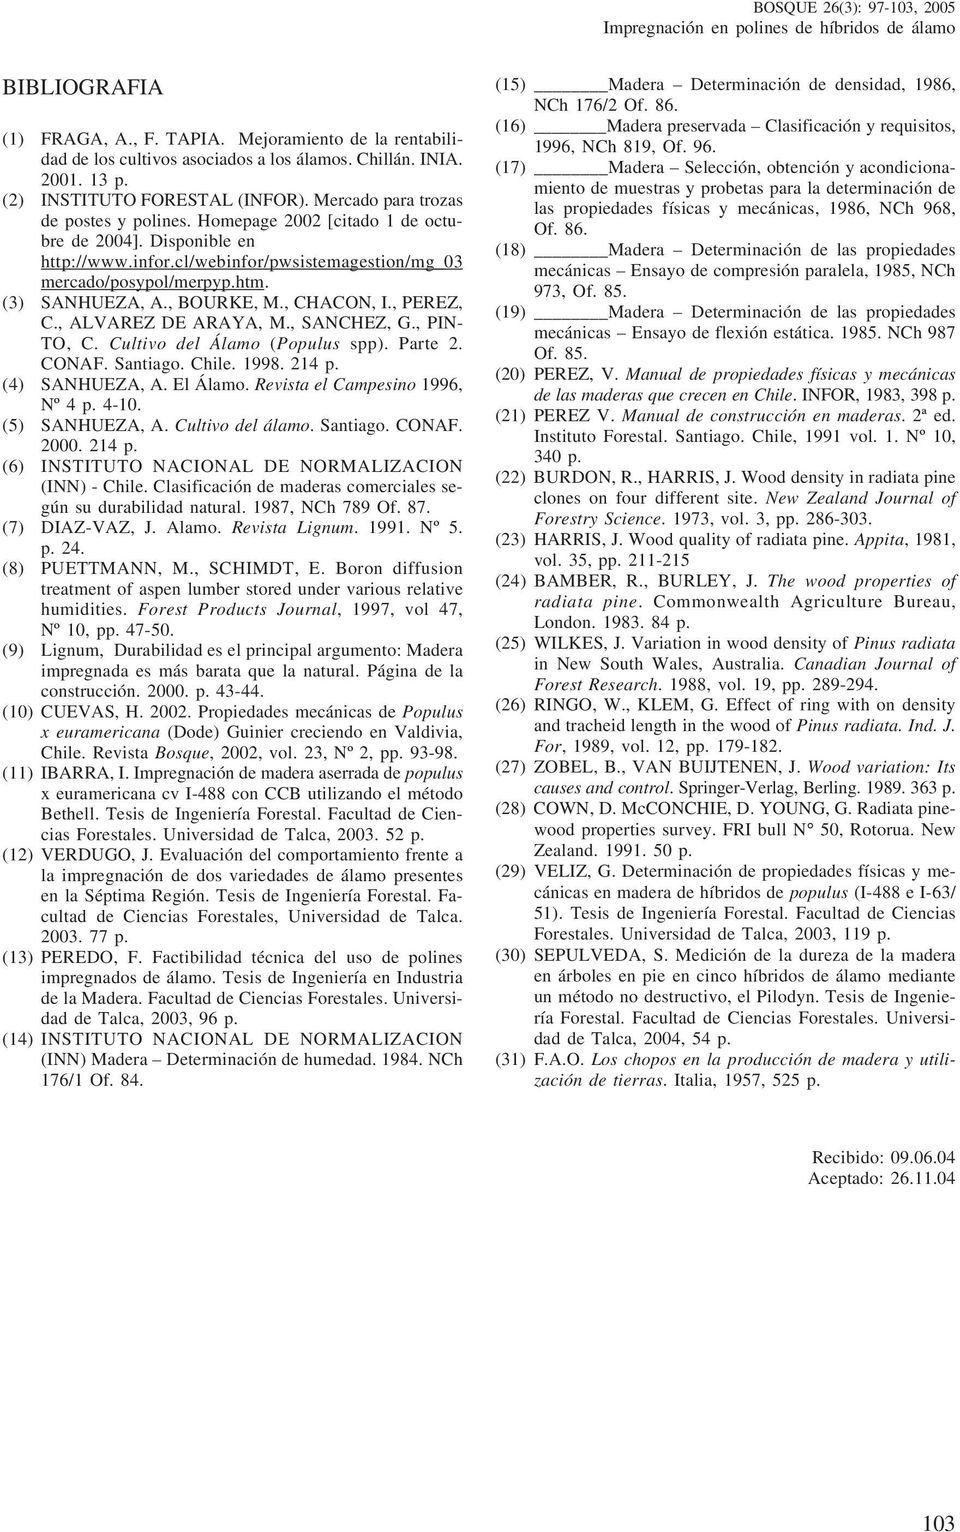 , BOURKE, M., CHACON, I., PEREZ, C., ALVAREZ DE ARAYA, M., SANCHEZ, G., PIN TO, C. Cultivo del Álamo (Populus spp). Parte 2. CONAF. Santiago. Chile. 1998. 214 p. (4) SANHUEZA, A. El Álamo.